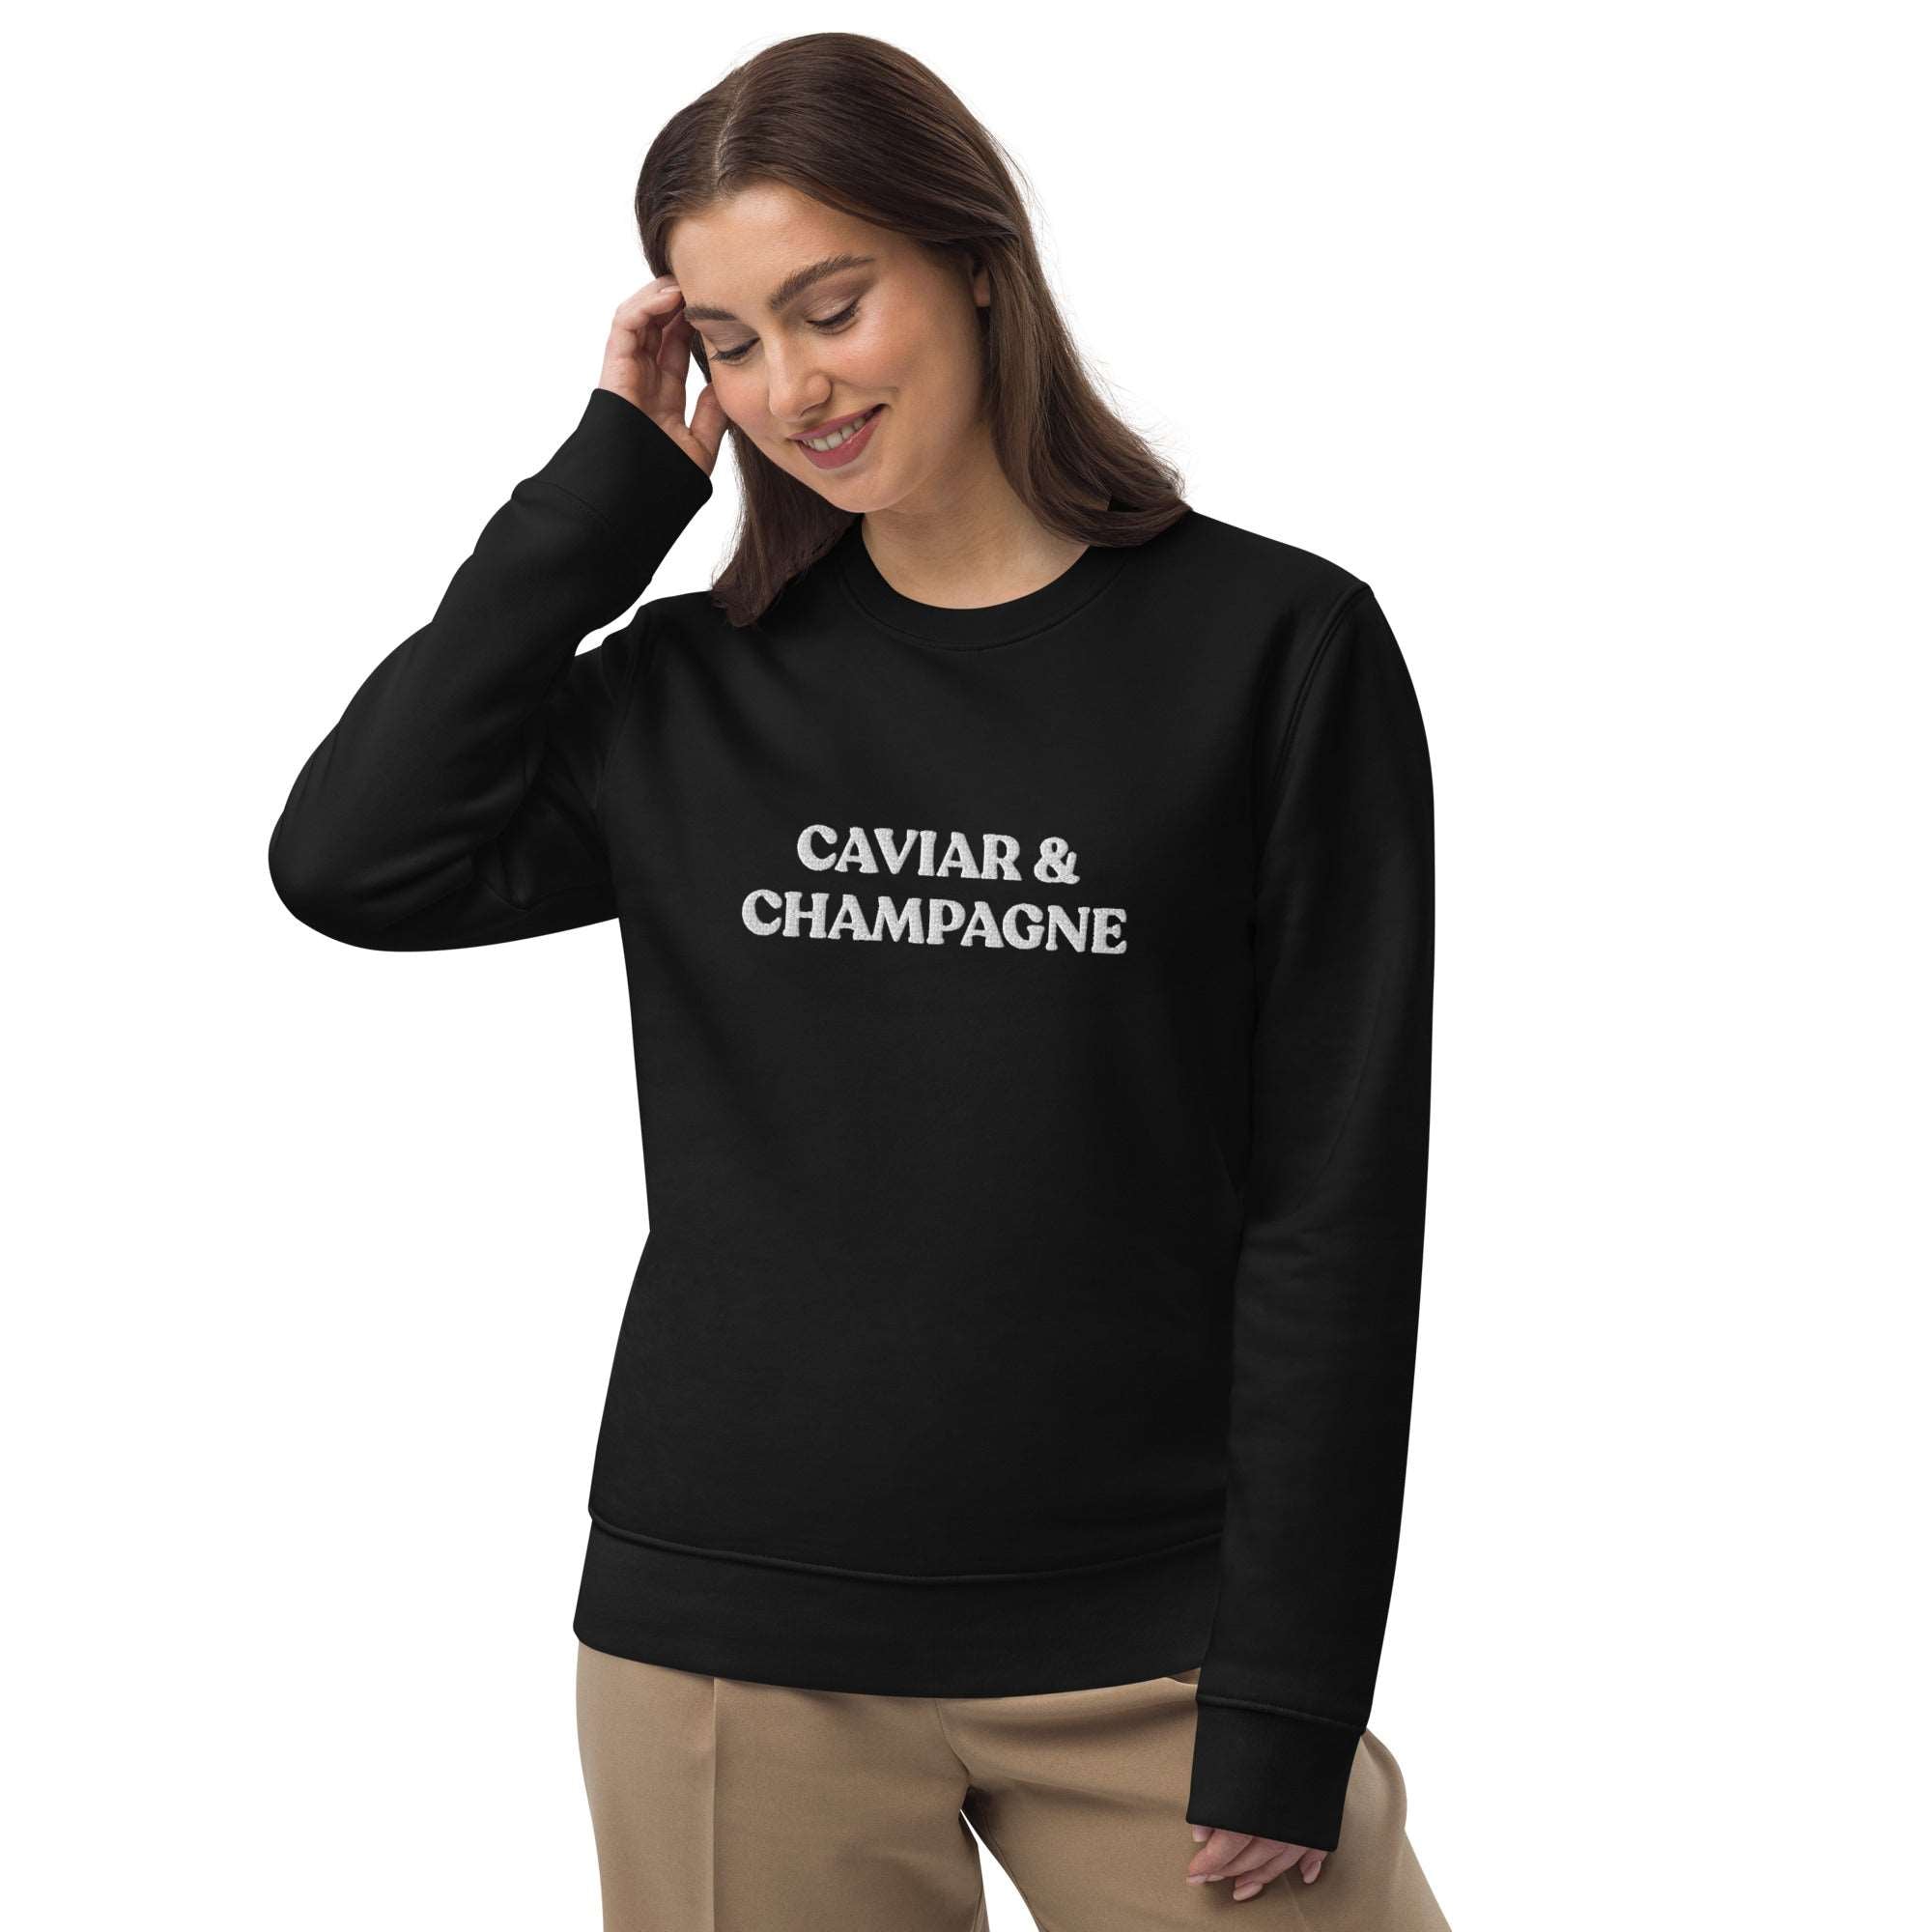 Caviar & Champagne - Organic Embroidered Sweatshirt - The Refined Spirit